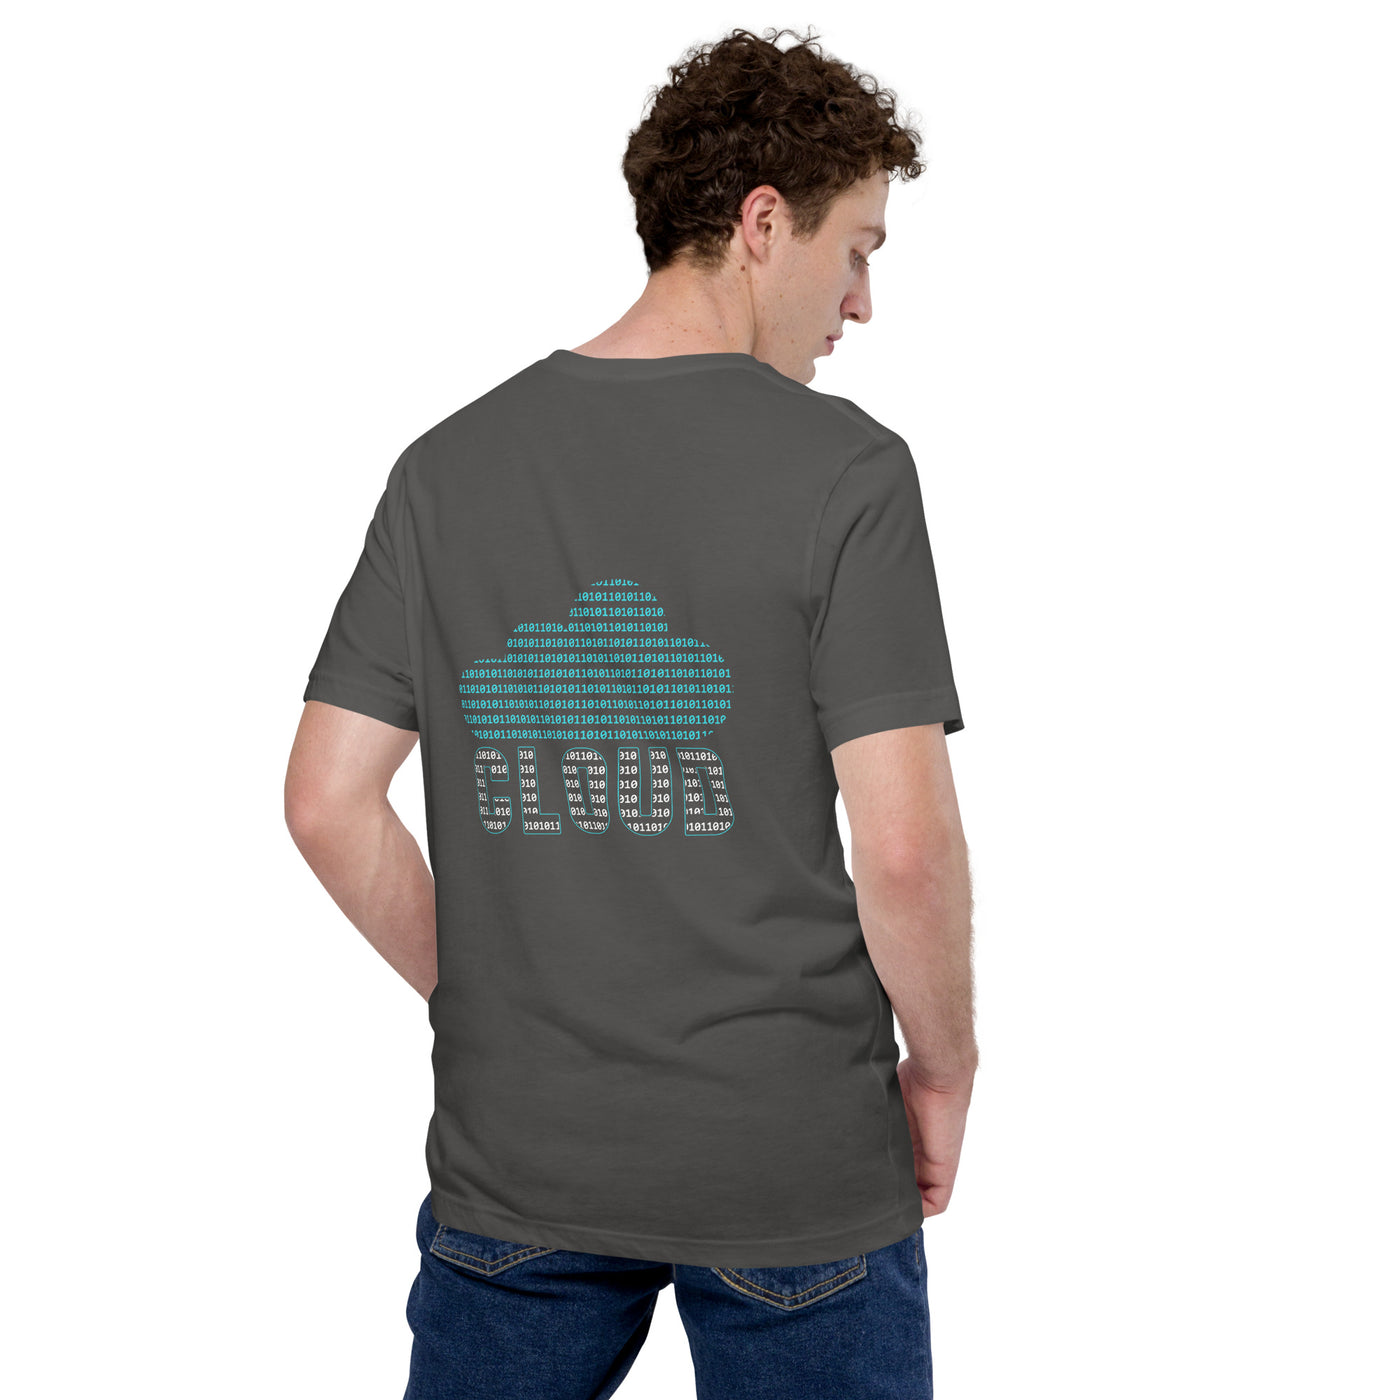 Digital Cloud - Unisex t-shirt